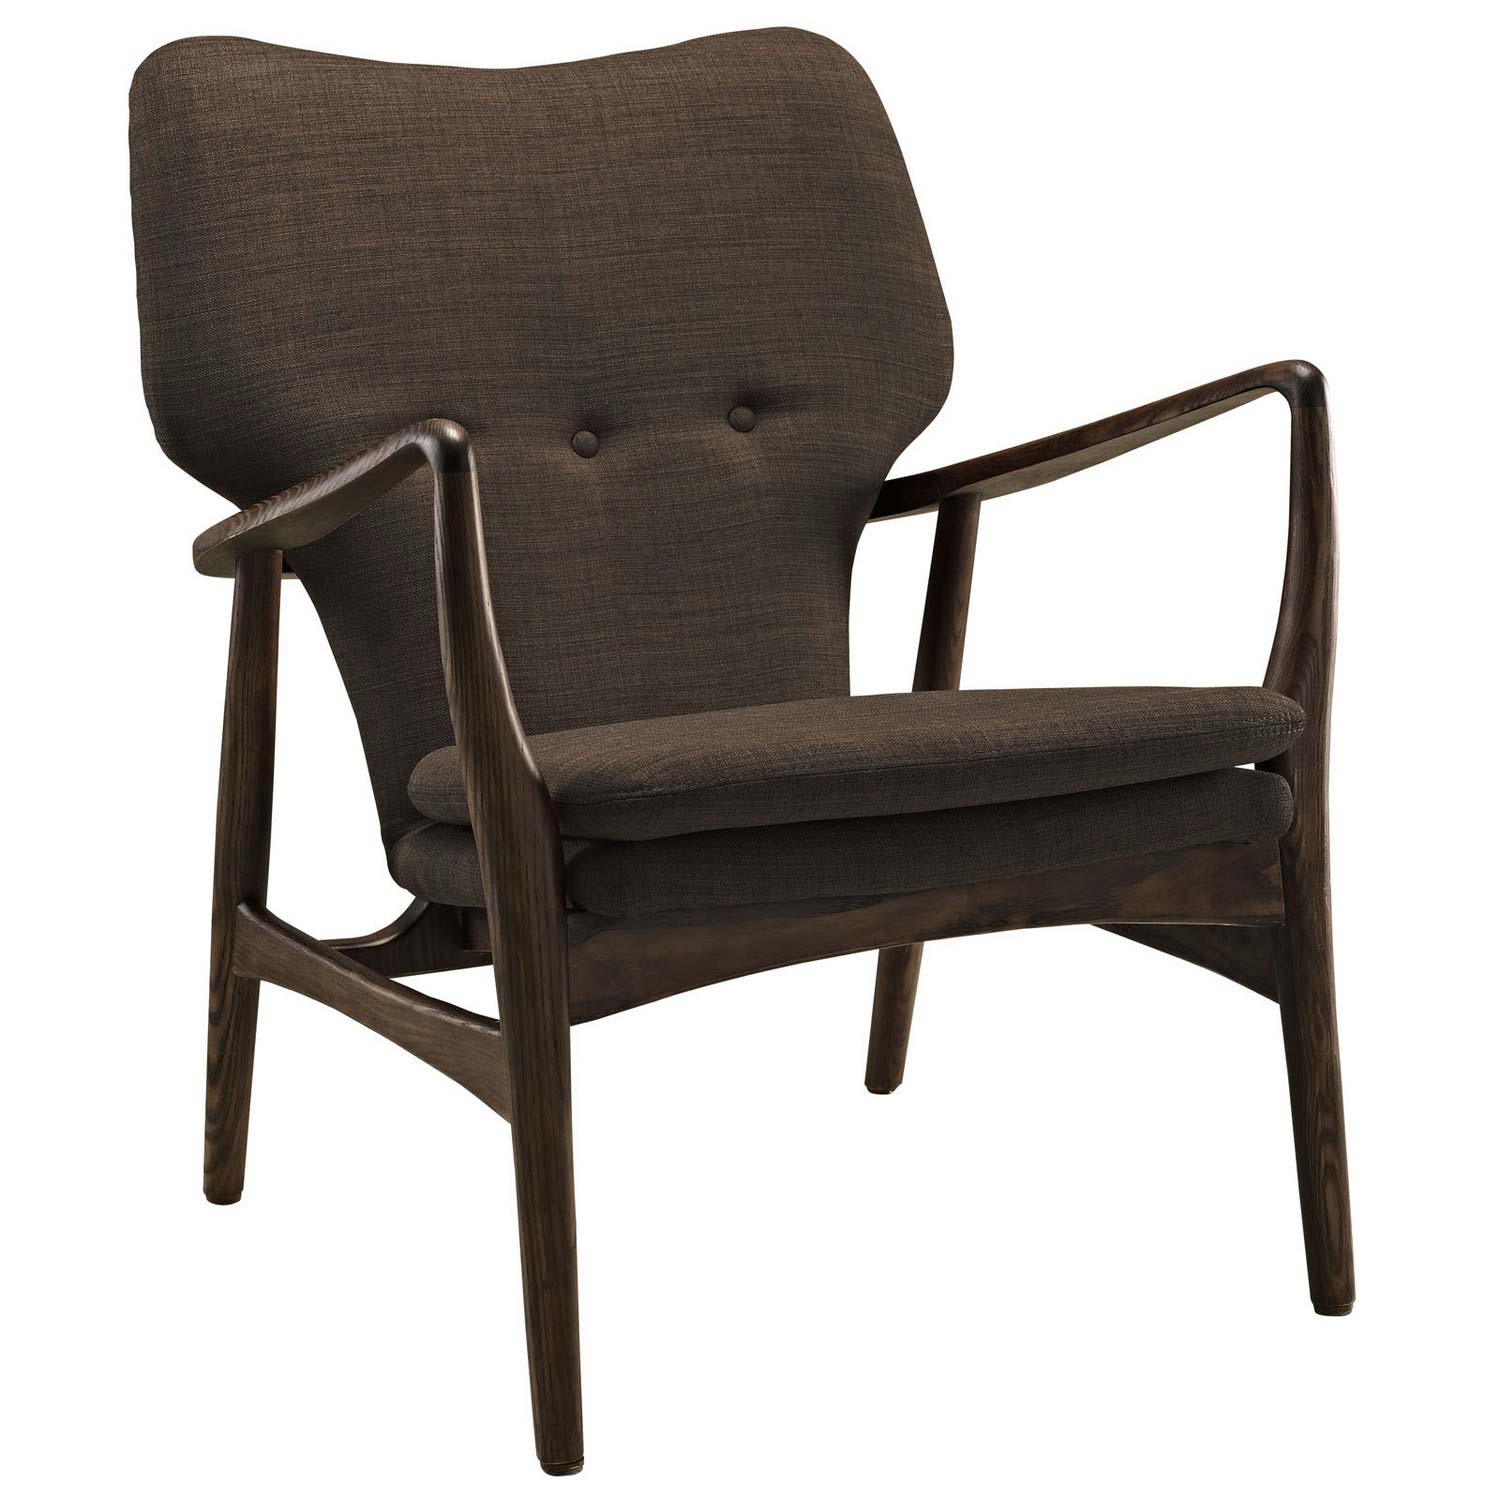 Modway Heed Lounge Chair - Walnut Brown